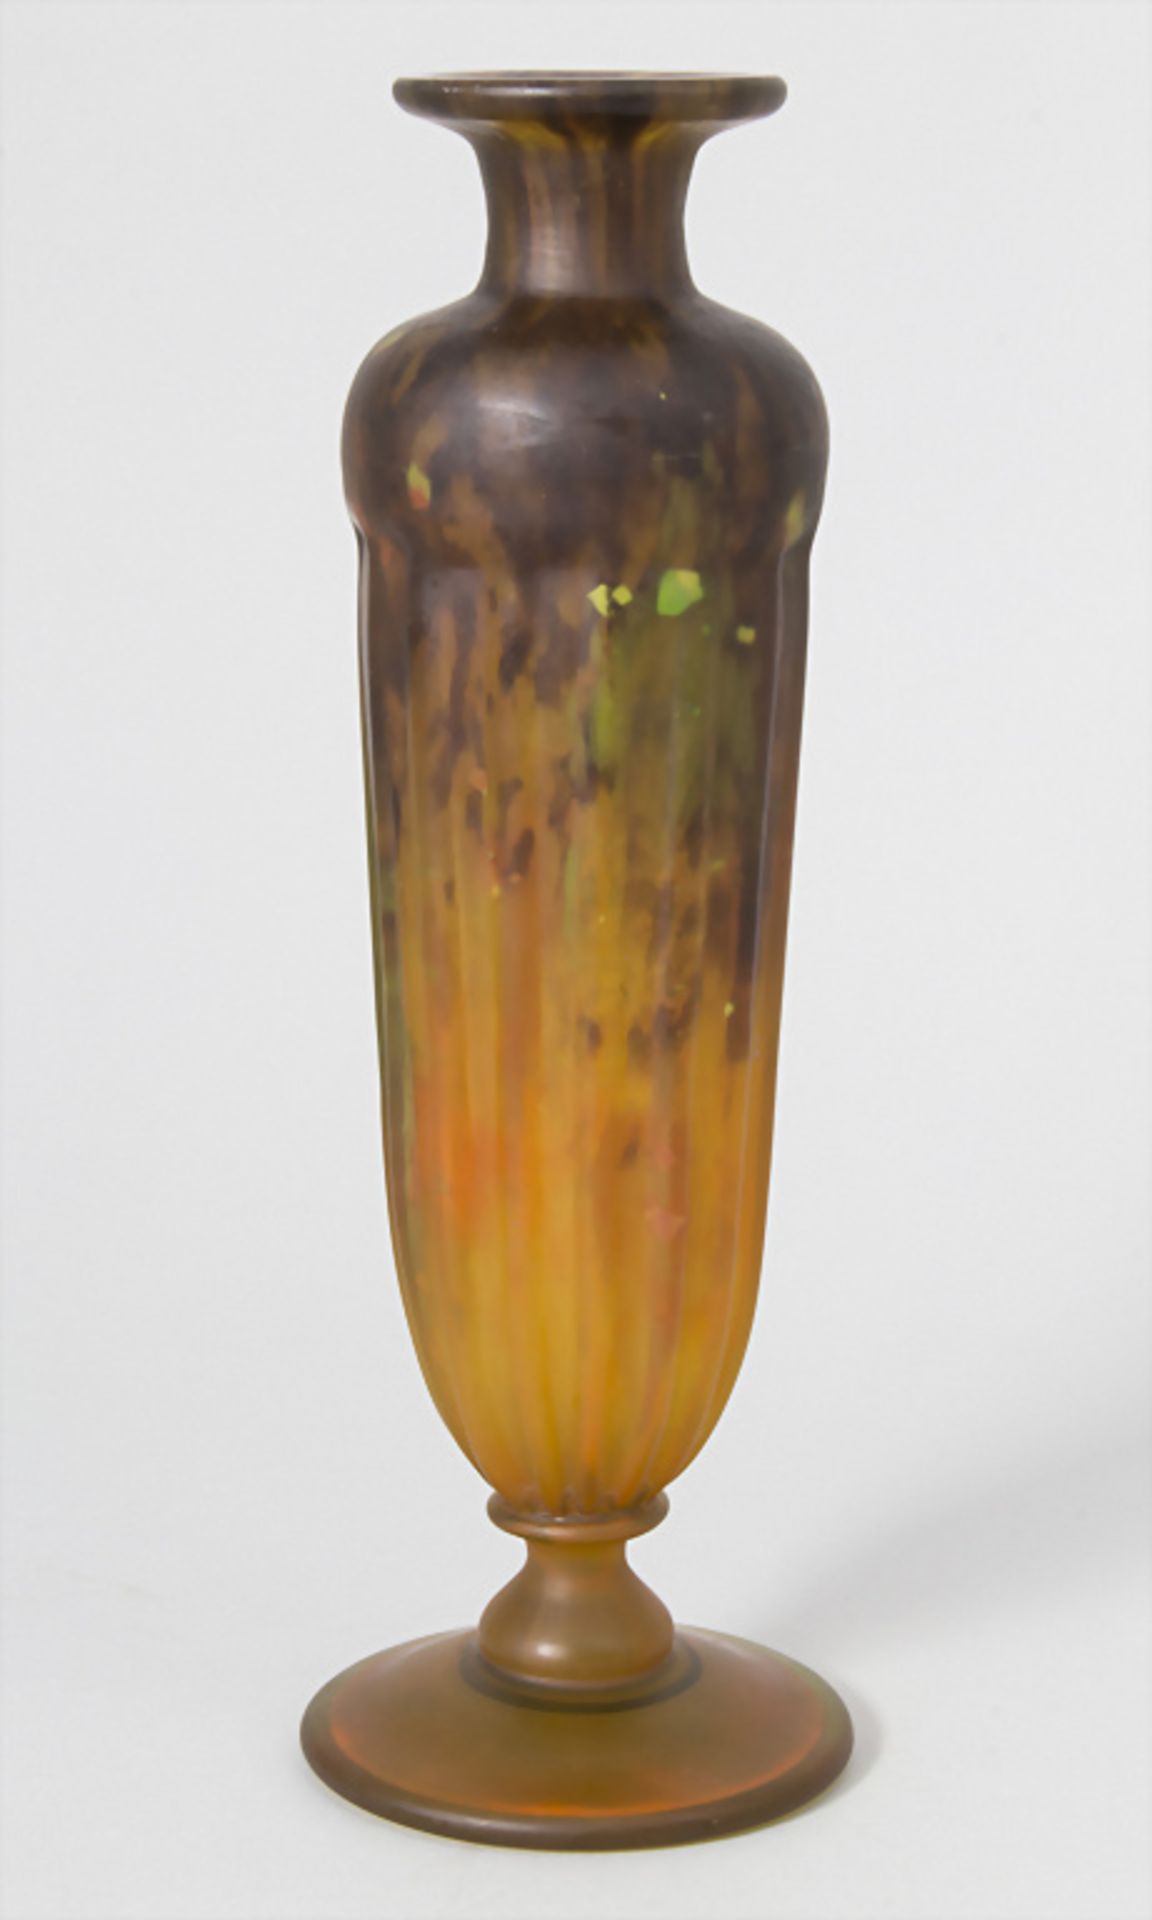 Jugendstil Vase / Art Nouveau glass vase, Daum Frères, Ecole de Nancy, Frankreich, um 1900 - Image 3 of 7